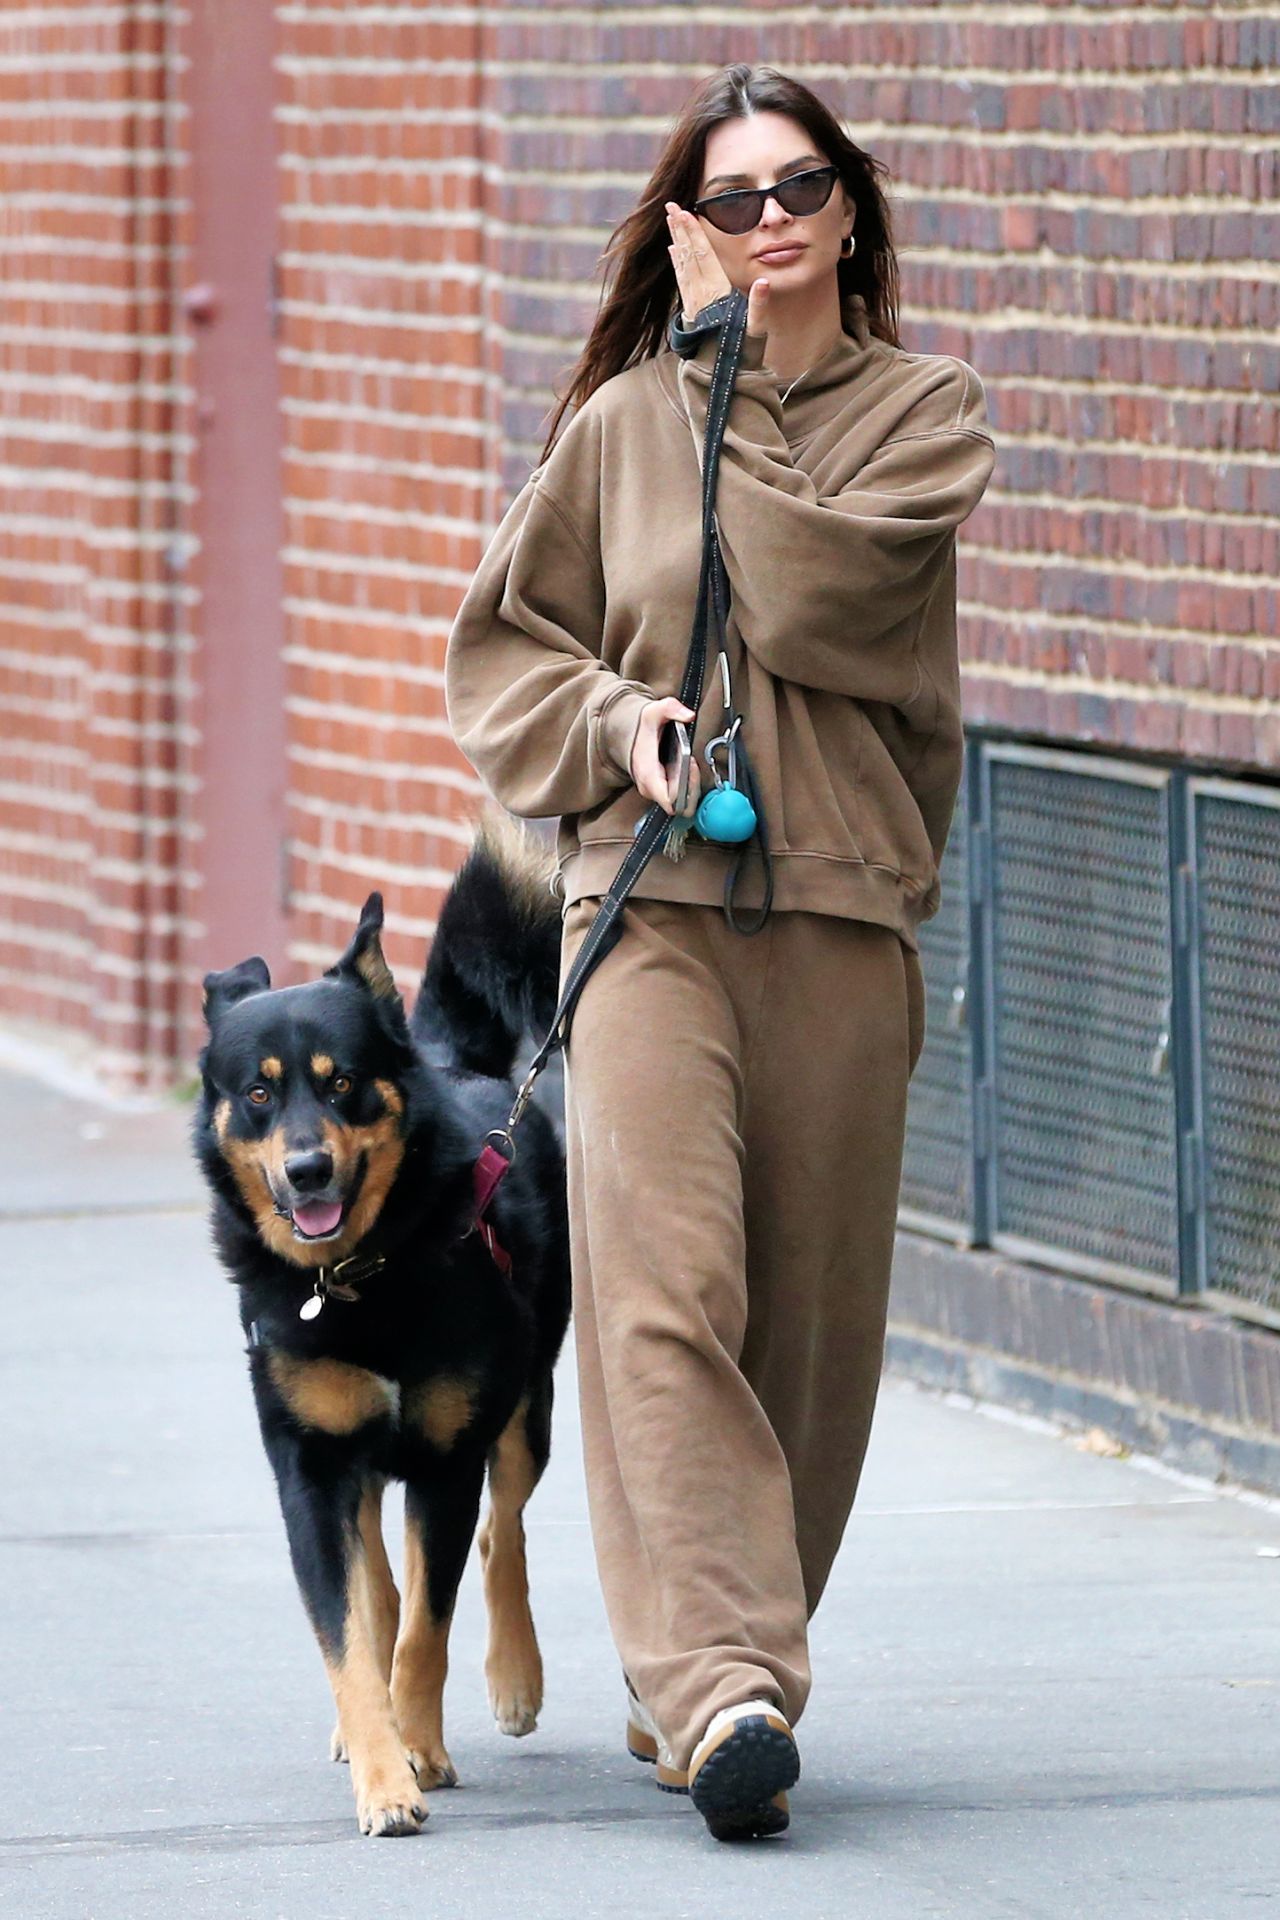 Emily Ratajkowski in chic brown sweats NYC street style